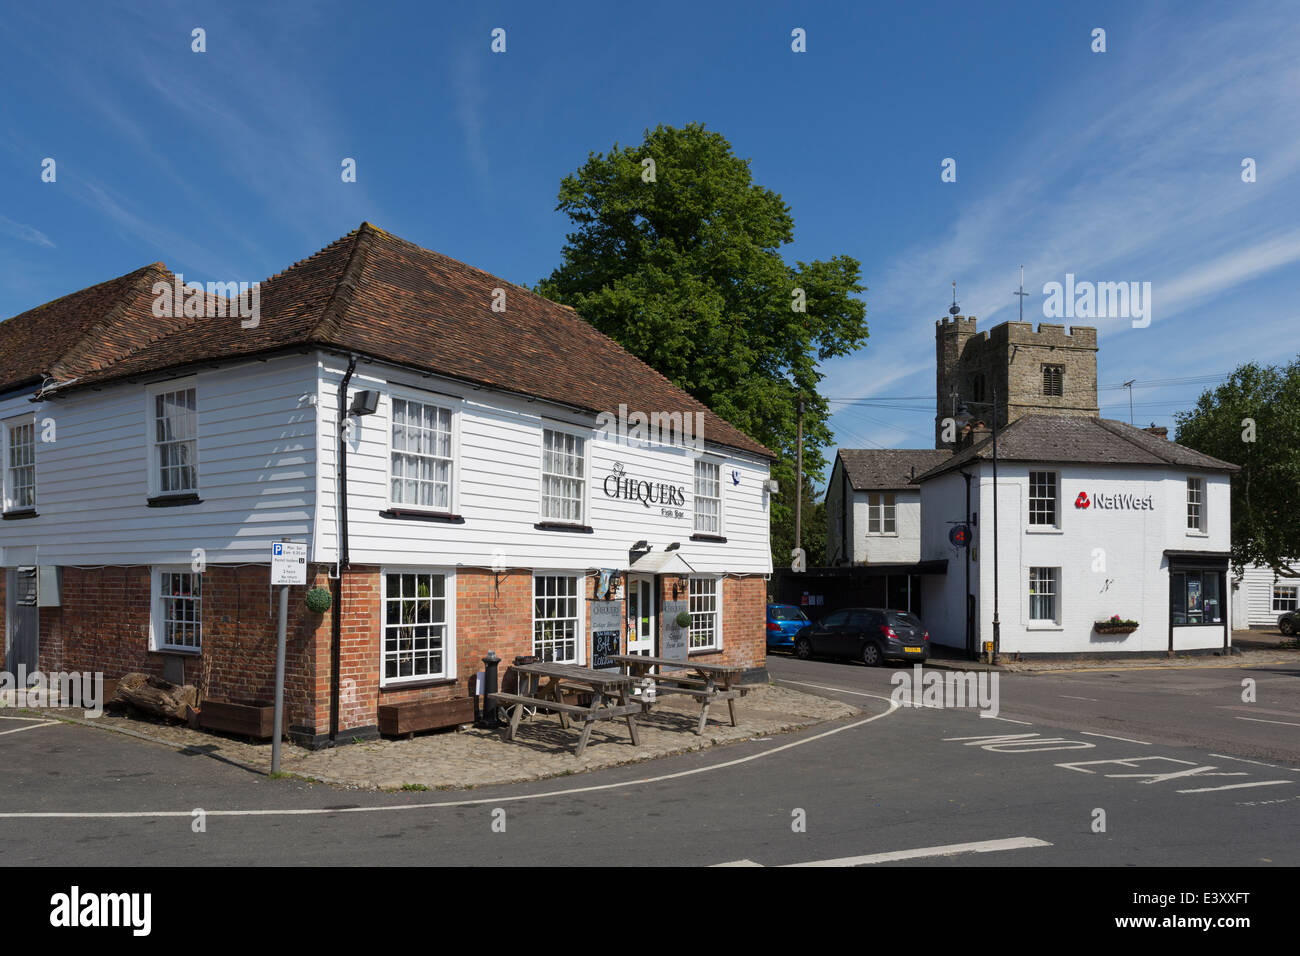 Chequers Fish Bar in the Pretty Village of Lenham Kent Stock Photo